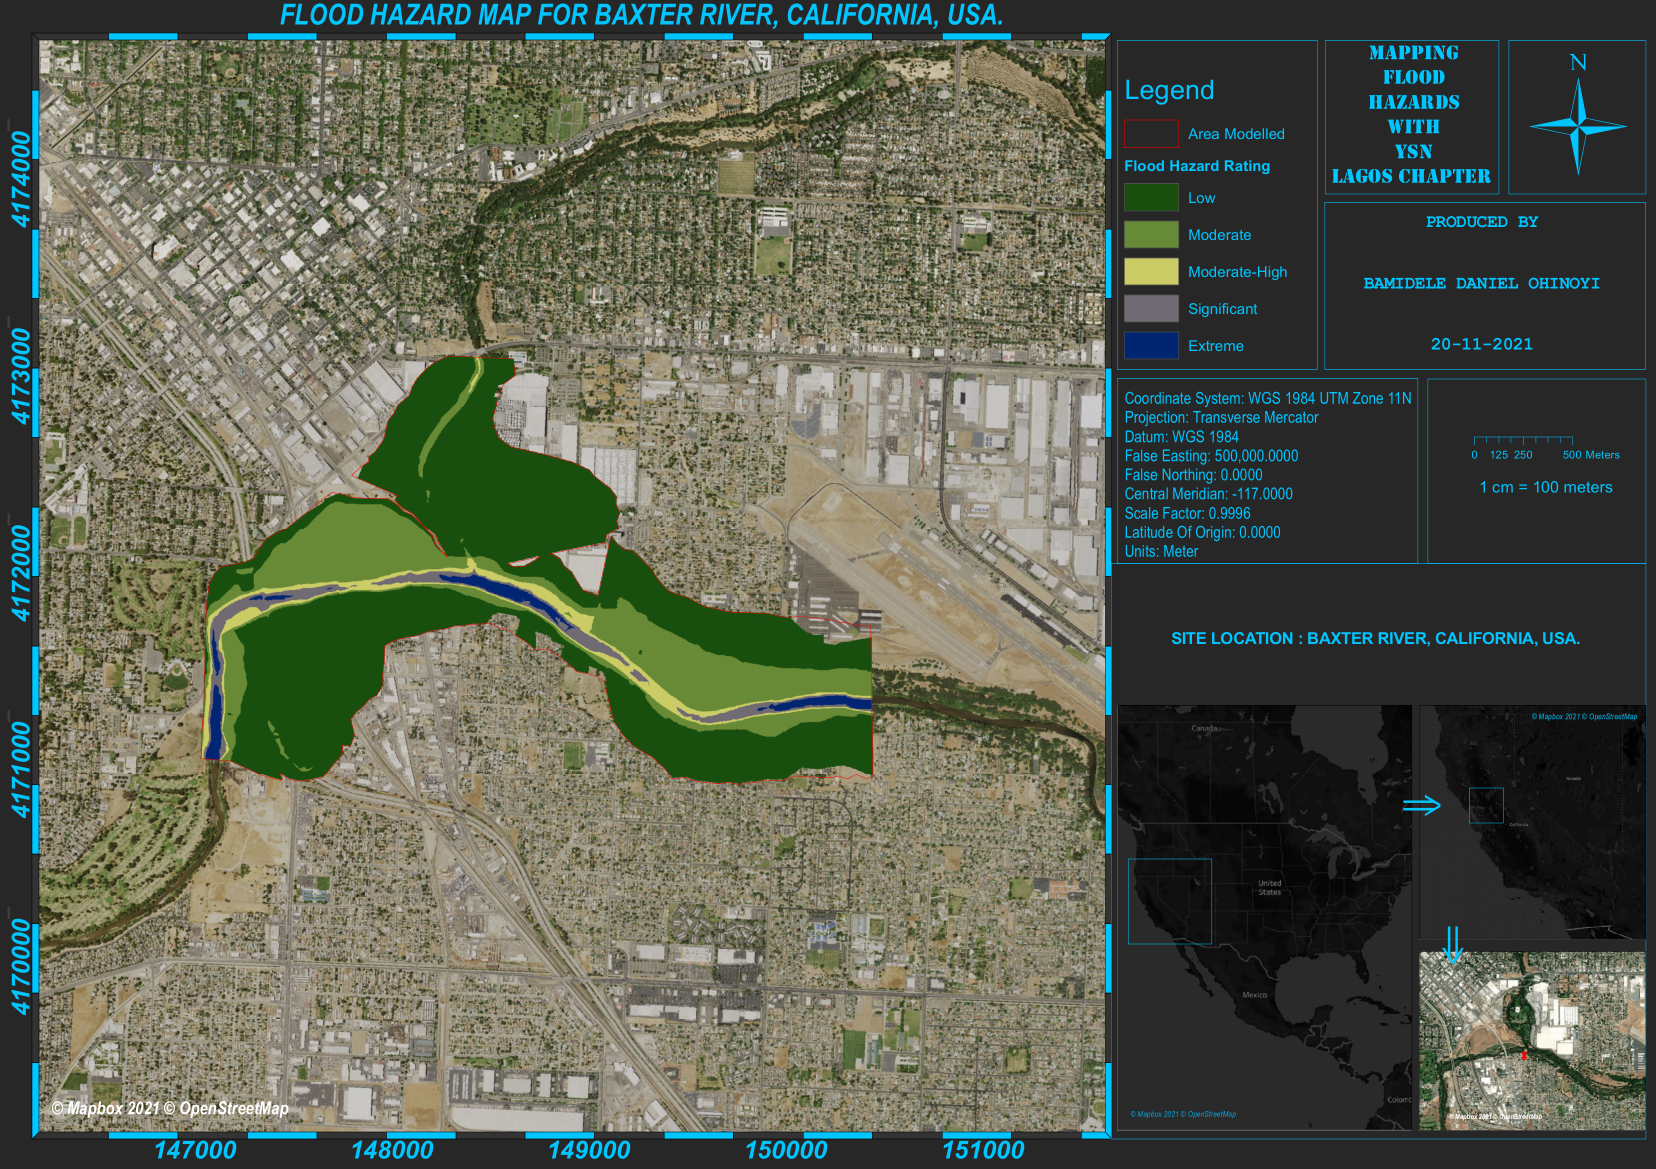 Flood Hazard Map for Baxter River, CA.